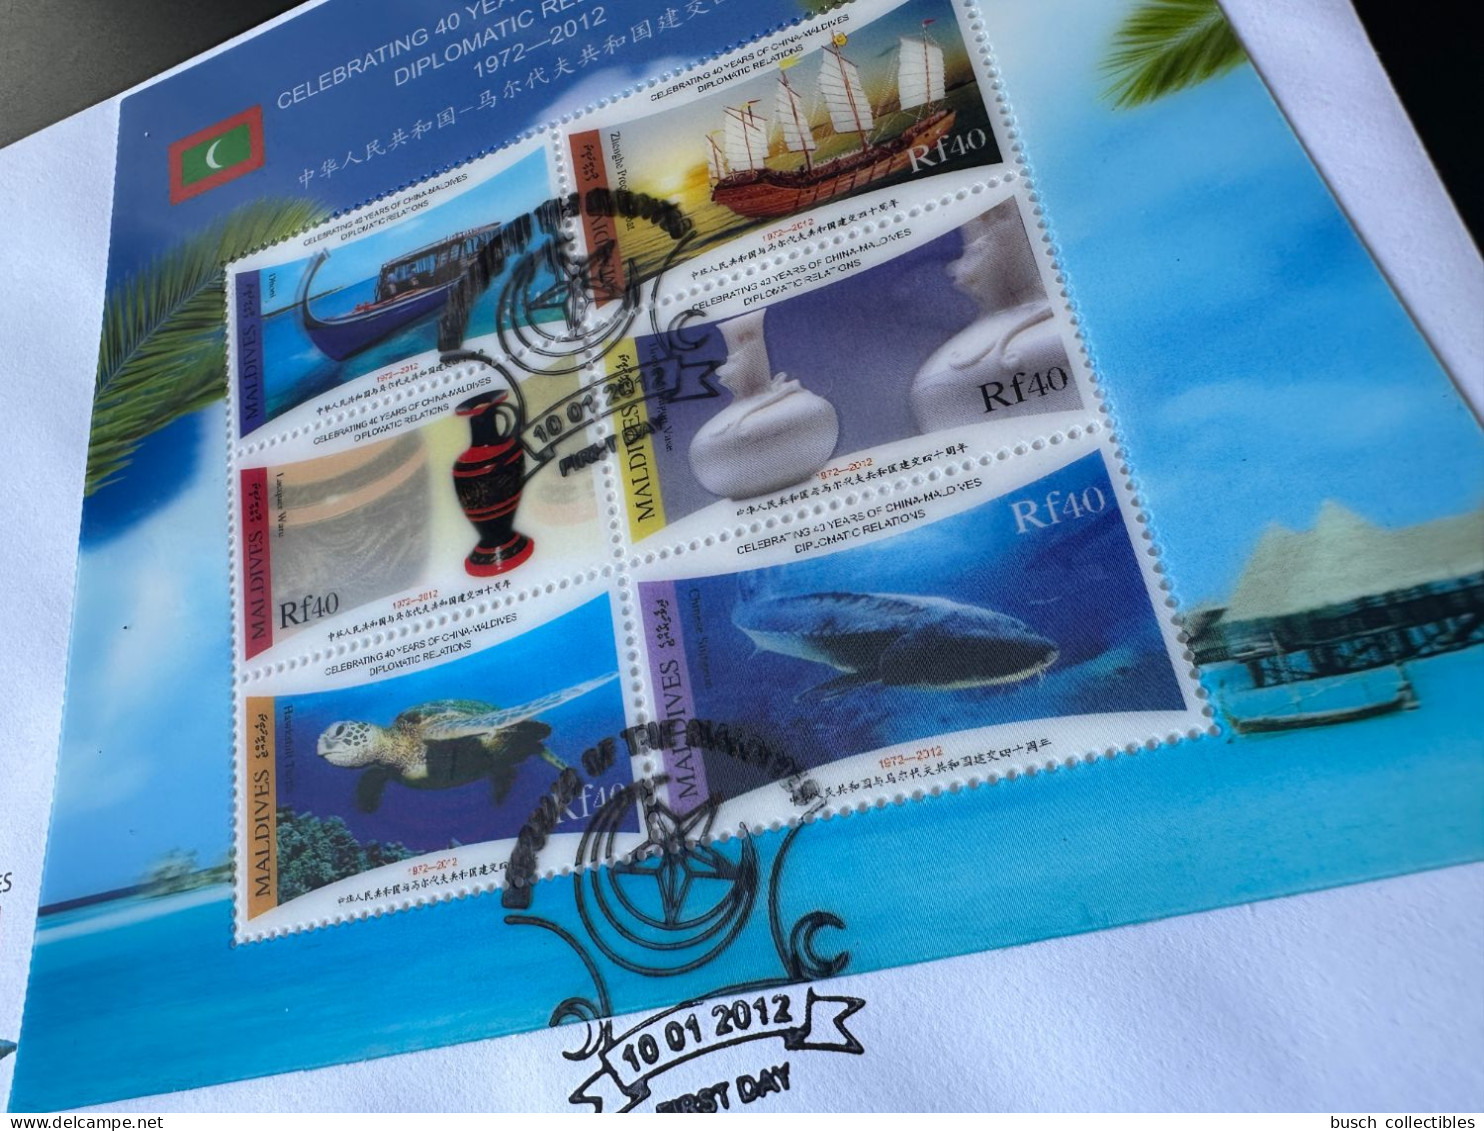 Maldives 2012 Mi. 4837 - 4842 FDC Plastic Block Diplomatic Relations China Chine Tortue Turtle Poisson Fish Boat Bateau - Unused Stamps